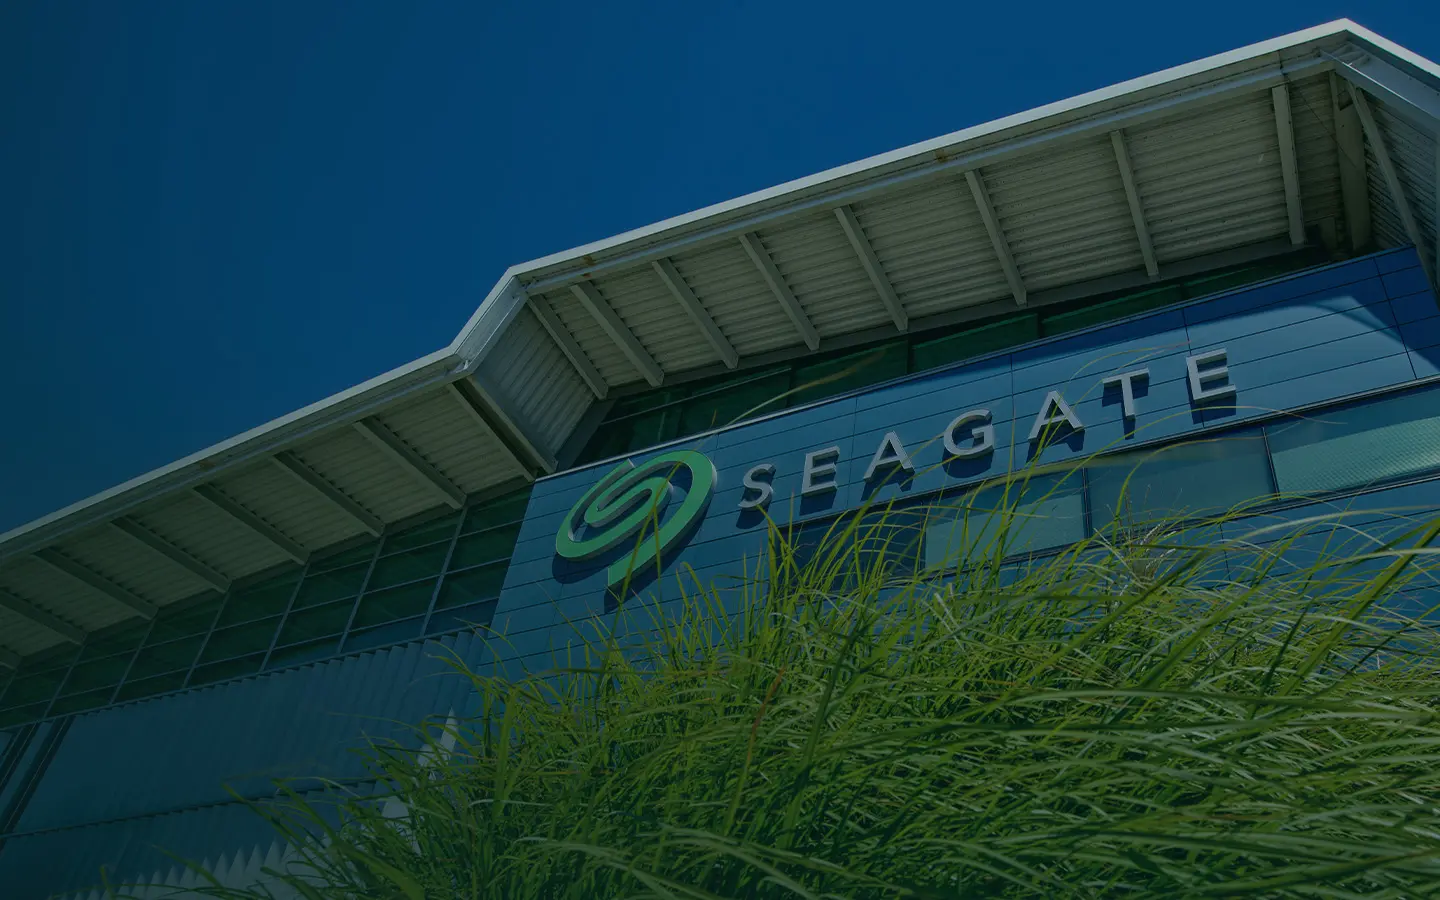 hewlett packard seagate - What does Seagate do